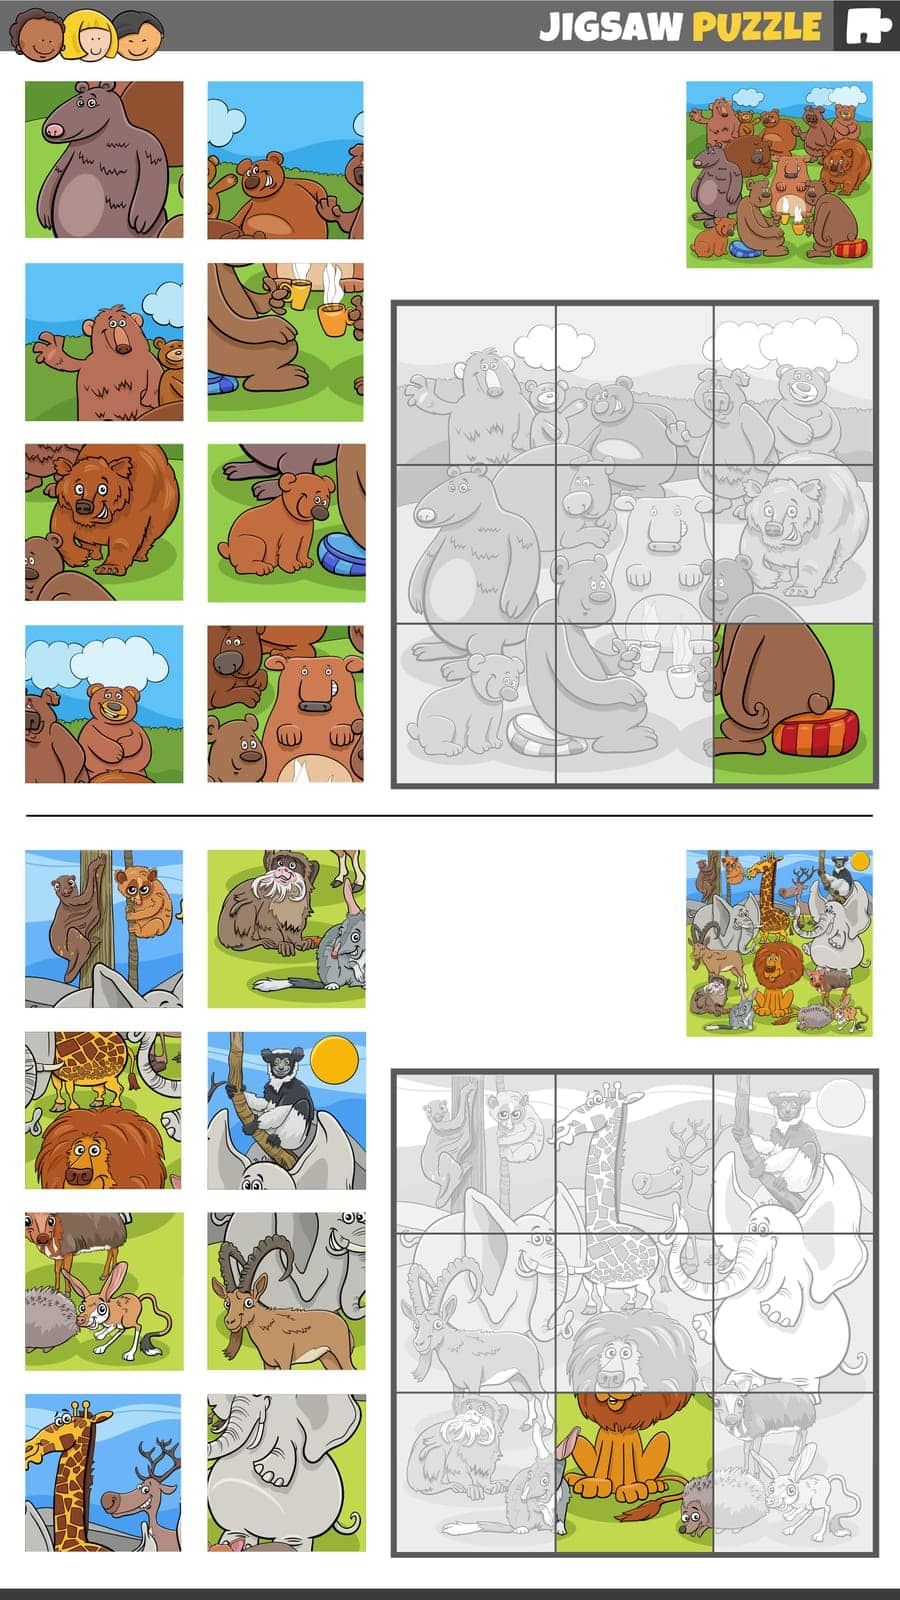 jigsaw puzzle games set with wild animal characters by izakowski